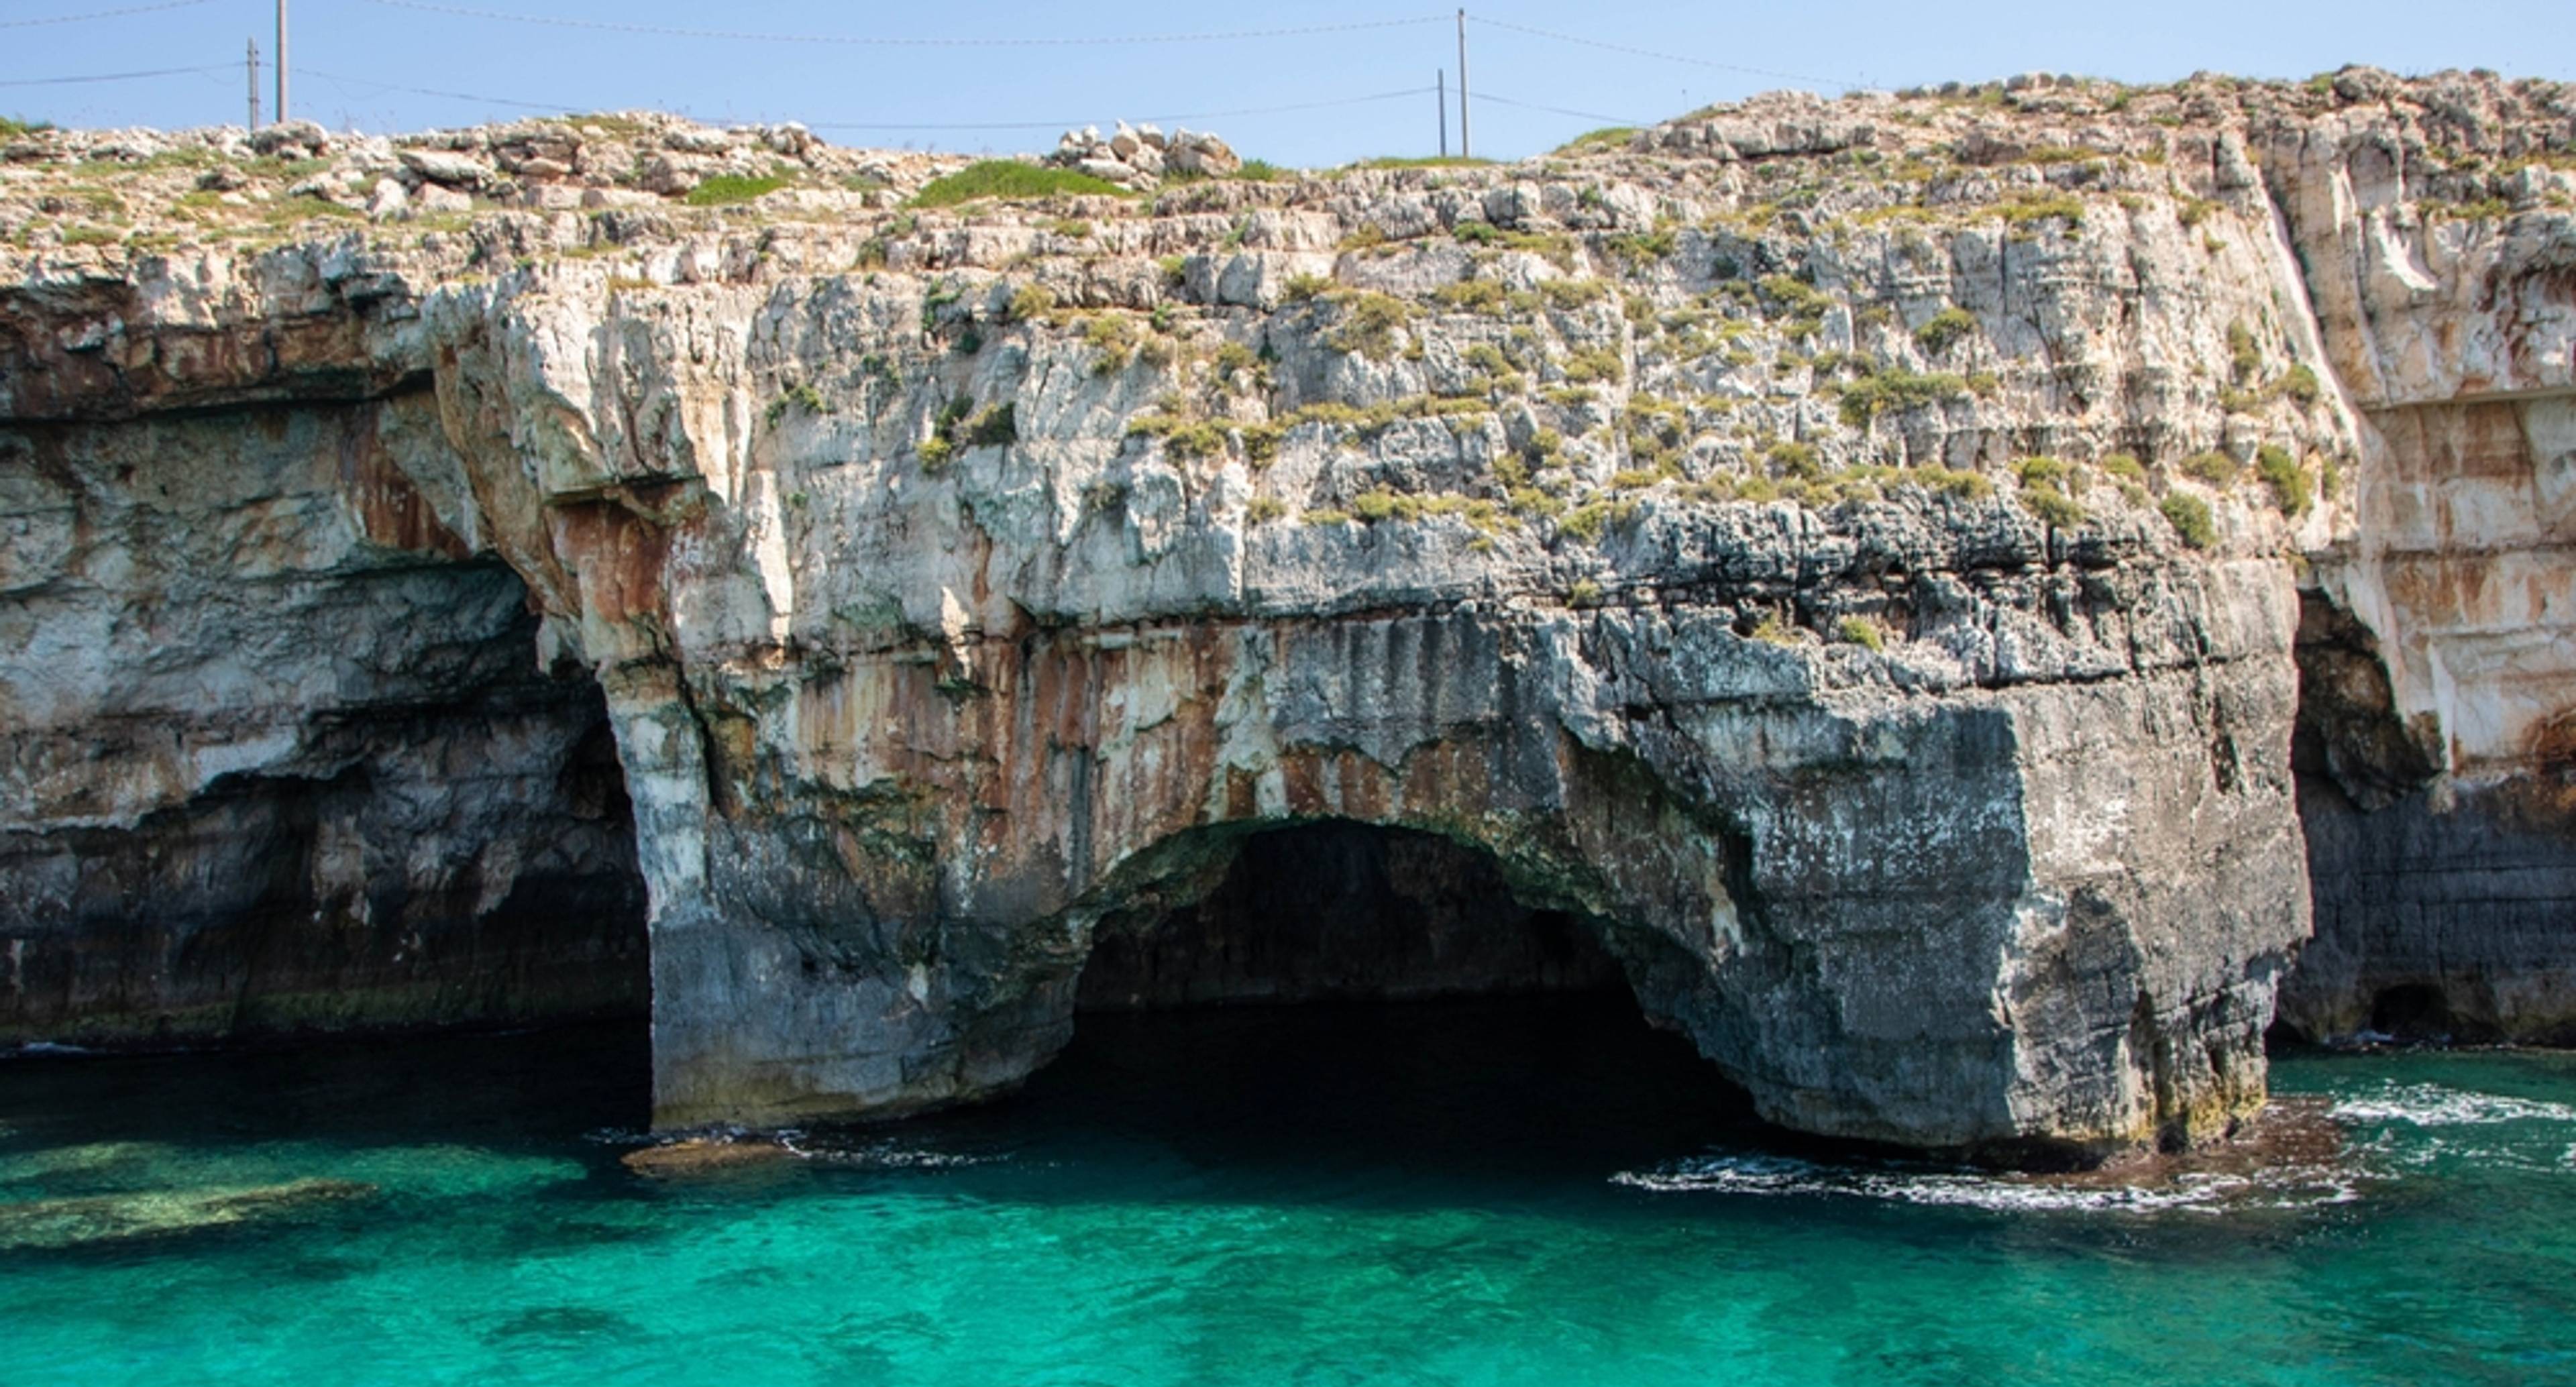 Adriatic Coast: High Cliffs And Emerald Sea